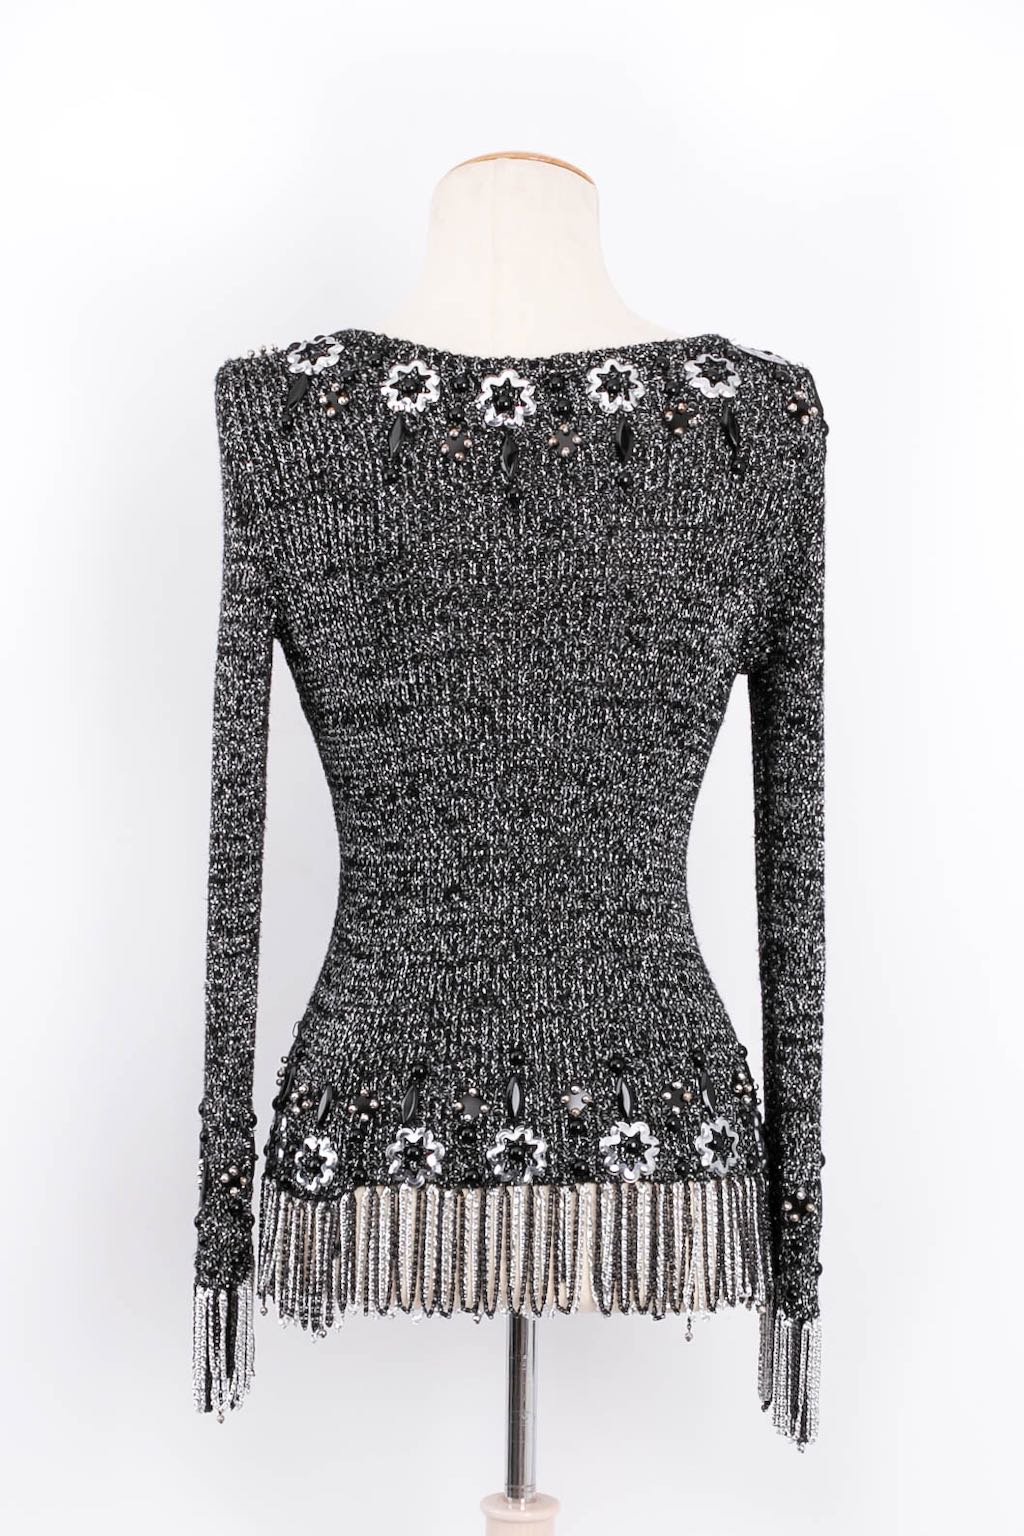 Loris Azzaro knitted top